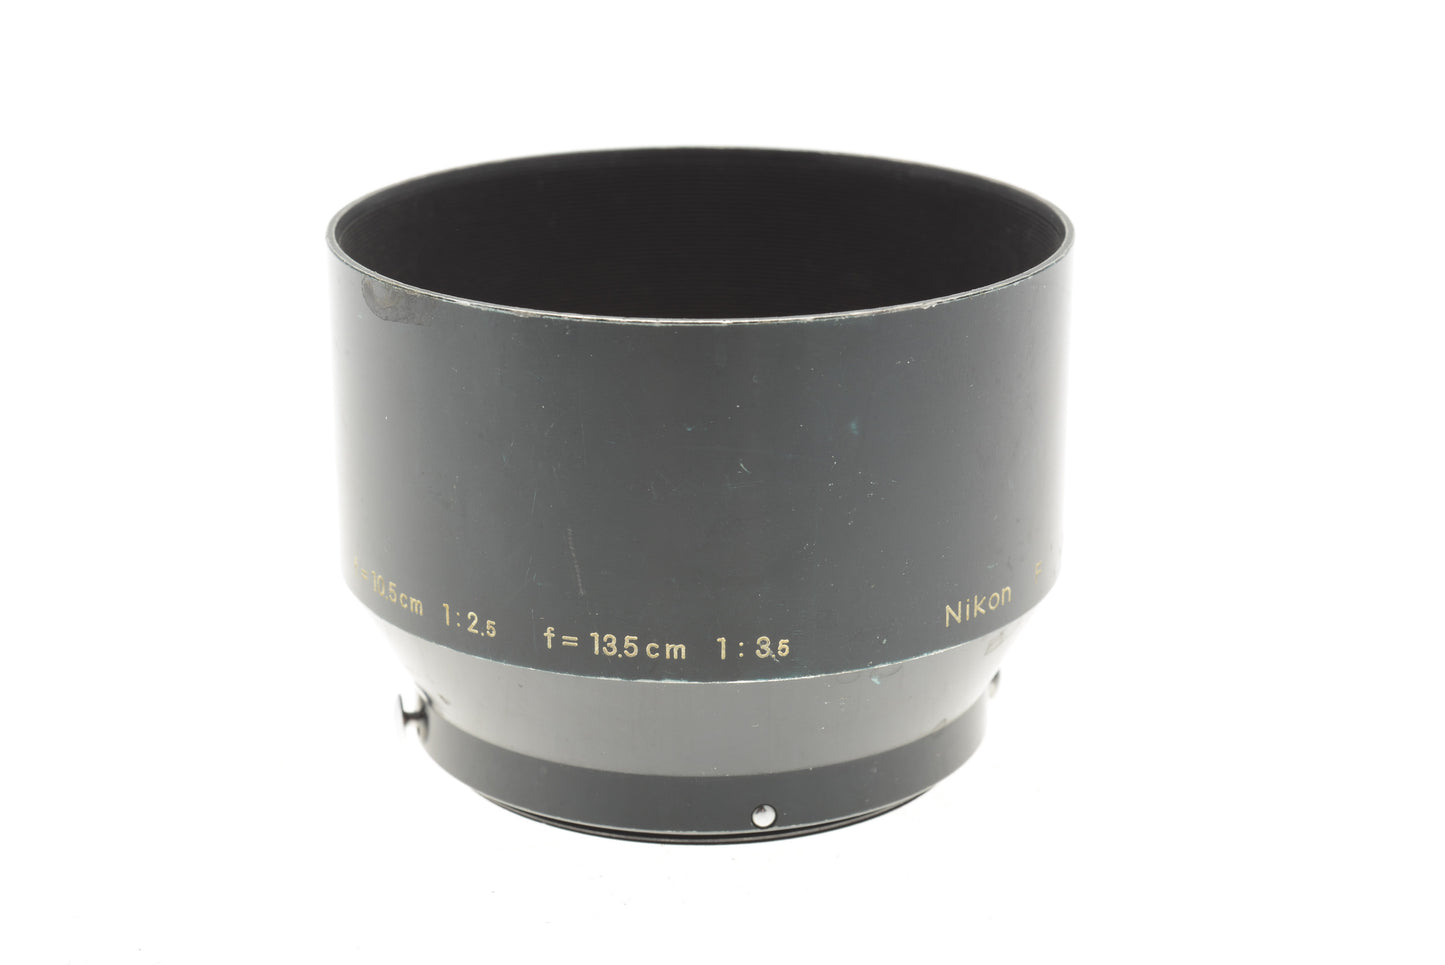 Nikon Lens Hood for 10.5cm f2.5 / 13.5cm f3.5 - Accessory